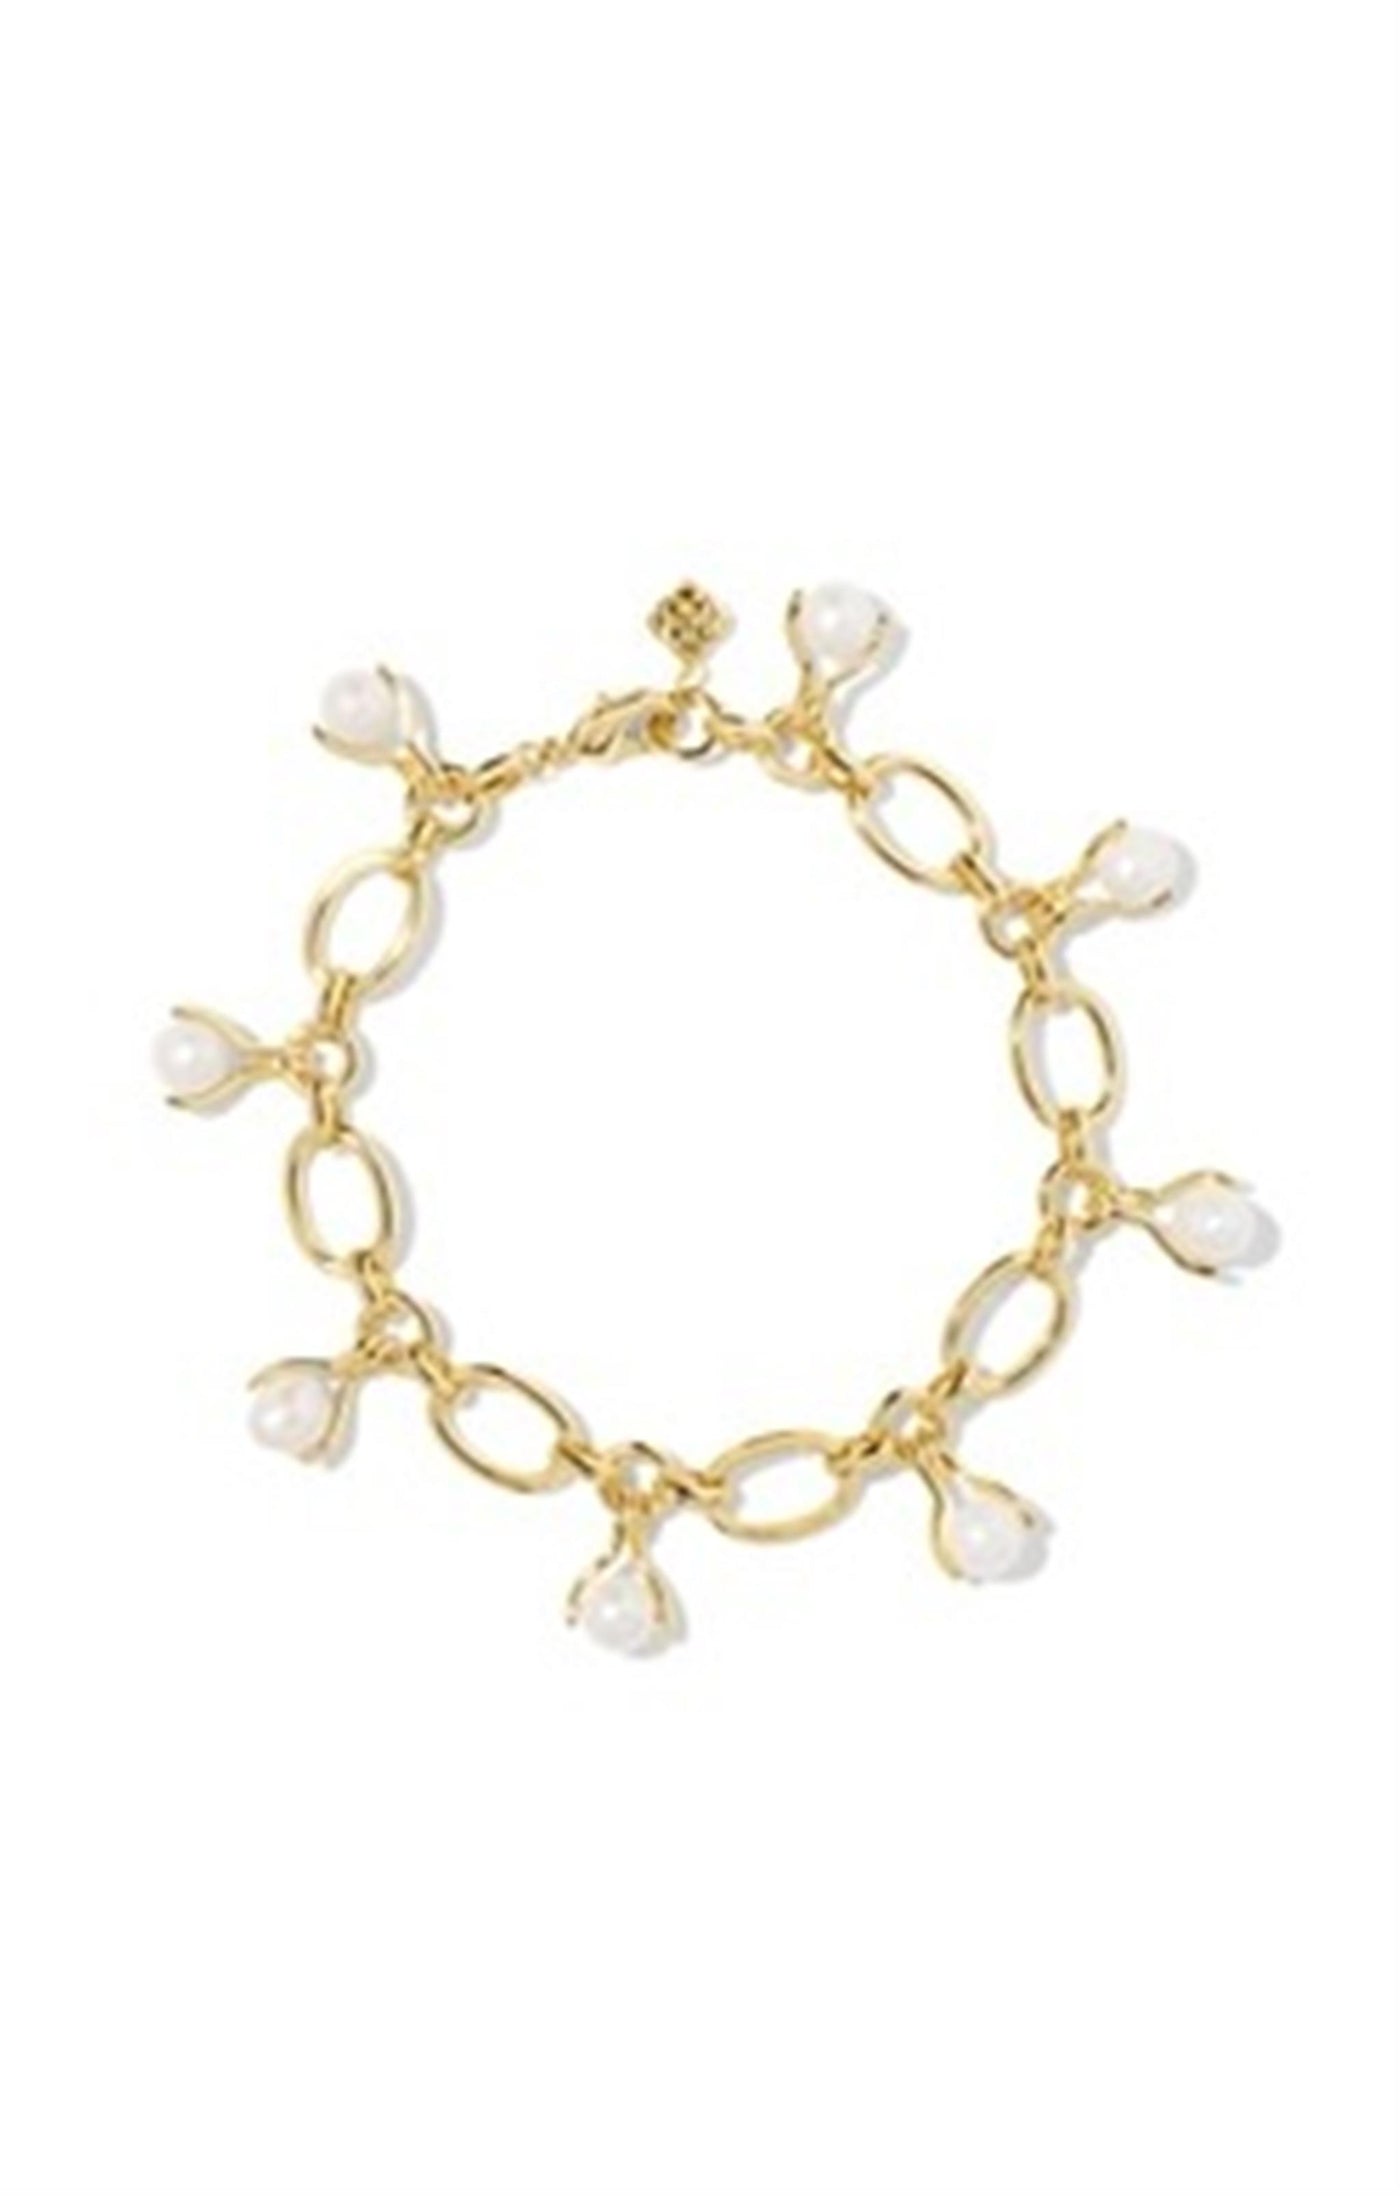 Gold Tone Bracelet Featuring White KS Pearl by Kendra Scott